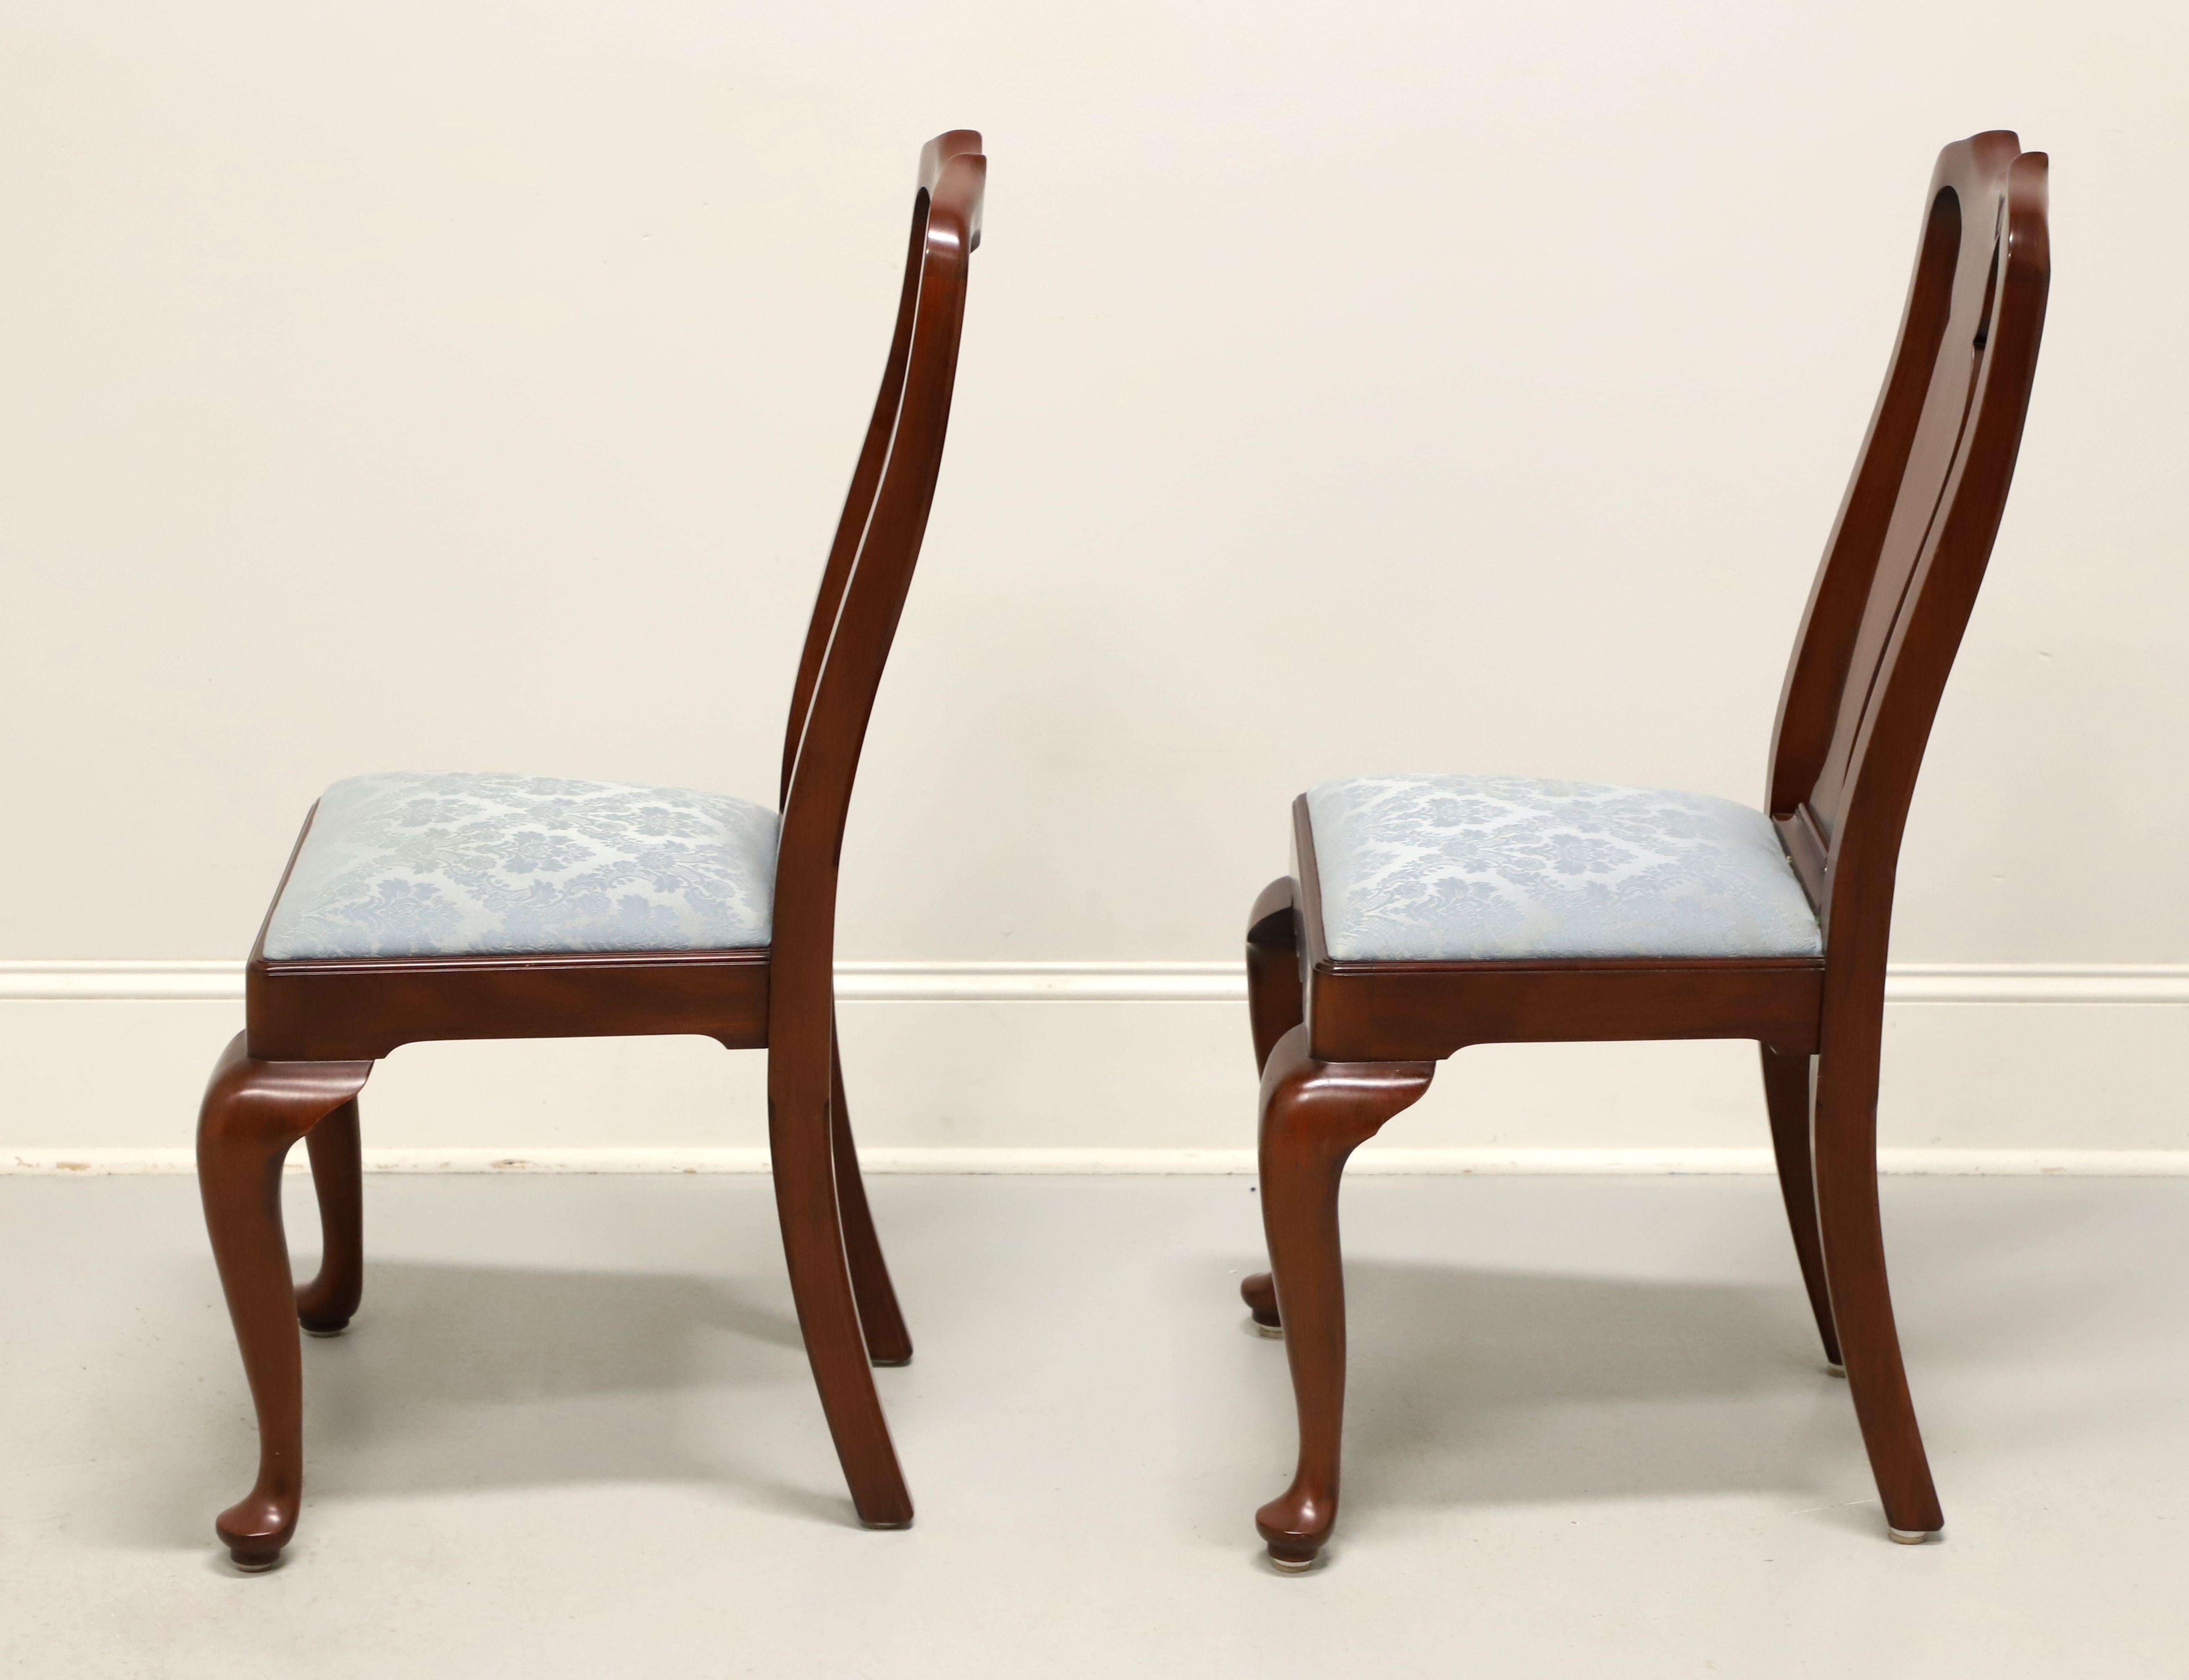 Fabric HENKEL HARRIS 109S 24 Wild Black Cherry Queen Anne Dining Side Chairs - Pair A